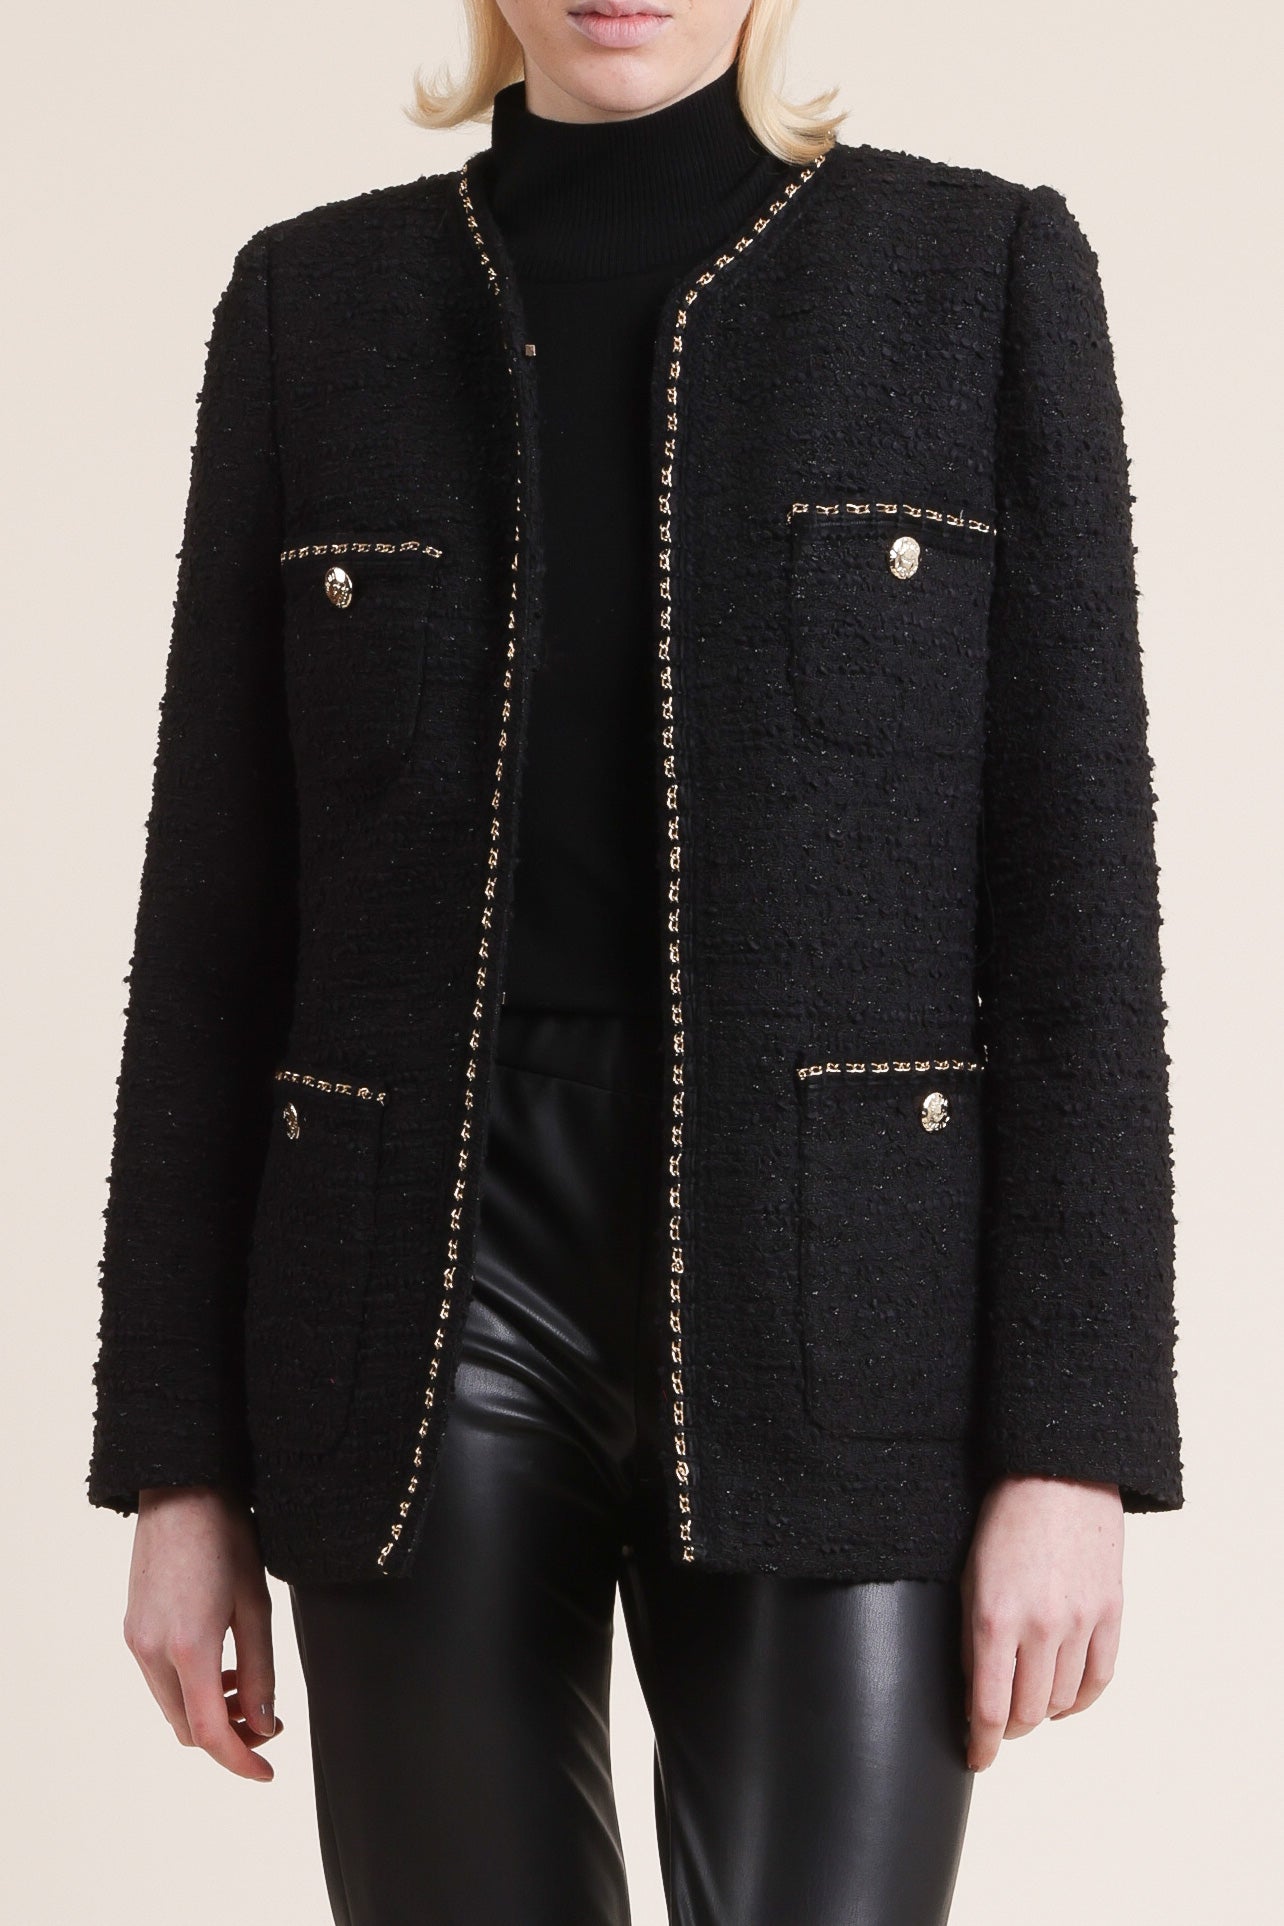 A sophisticated black tweed jacket worn by women